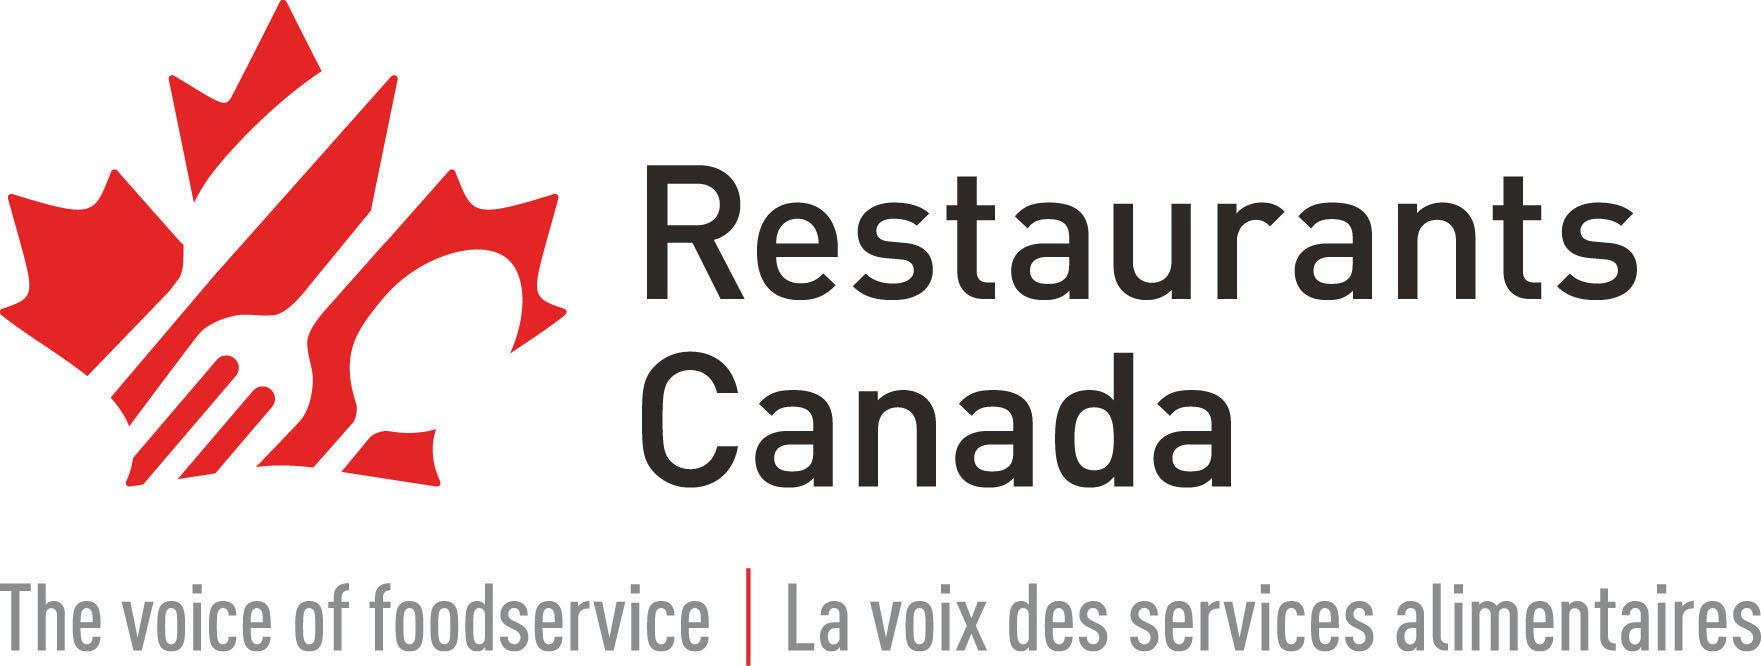 Restaurants Canada t